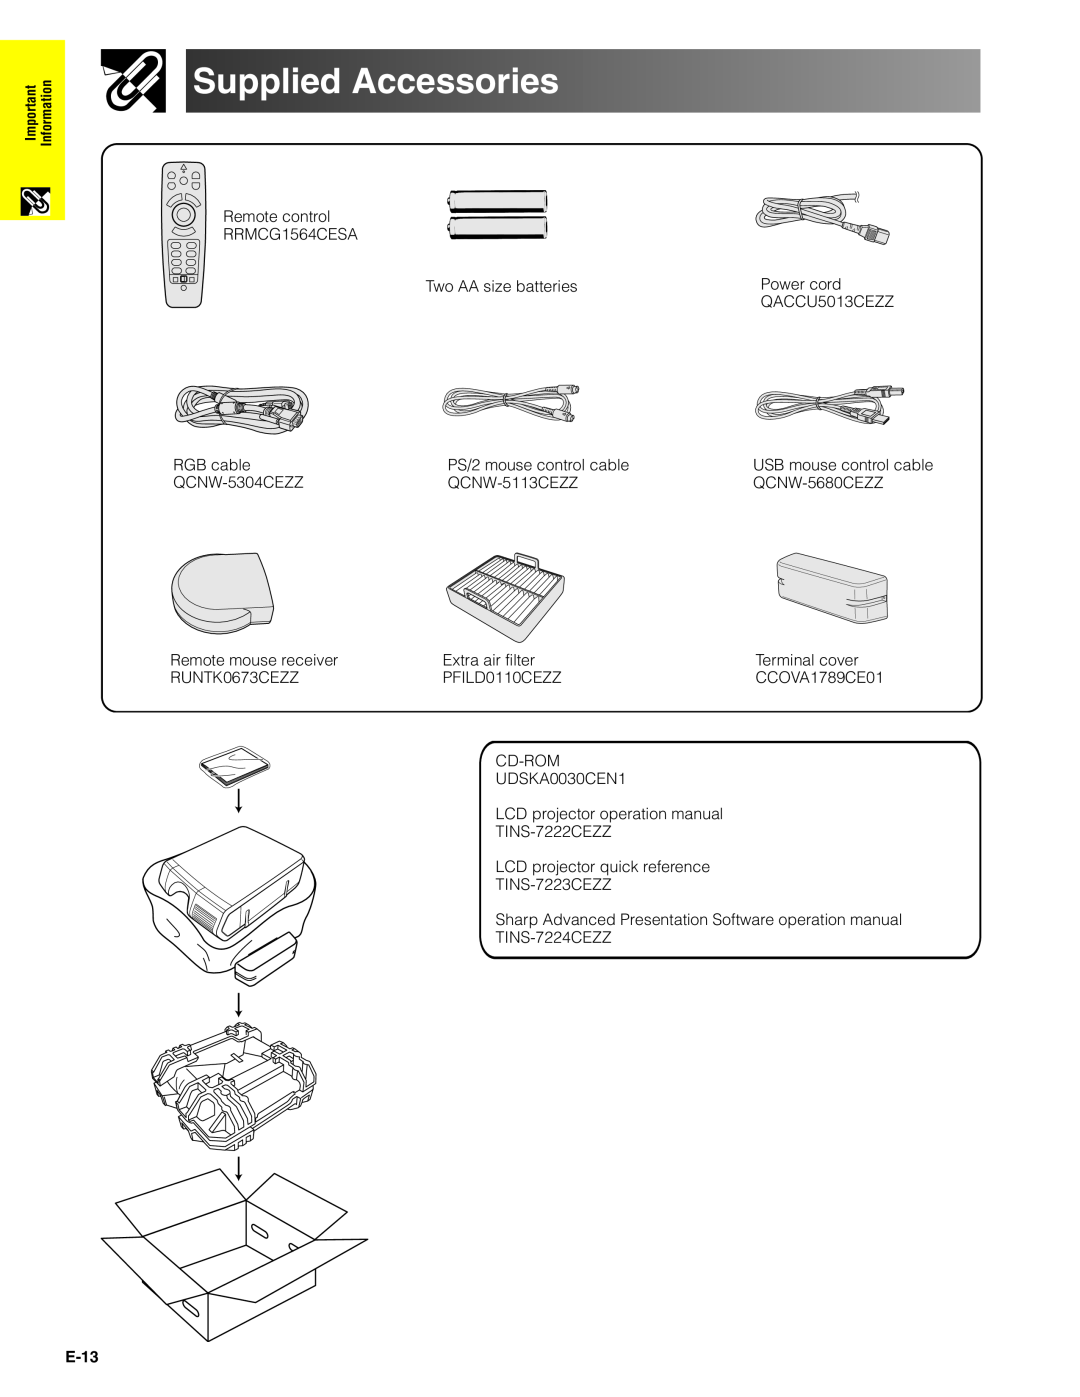 Sharp XG-V10XU operation manual Supplied Accessories, E-13 